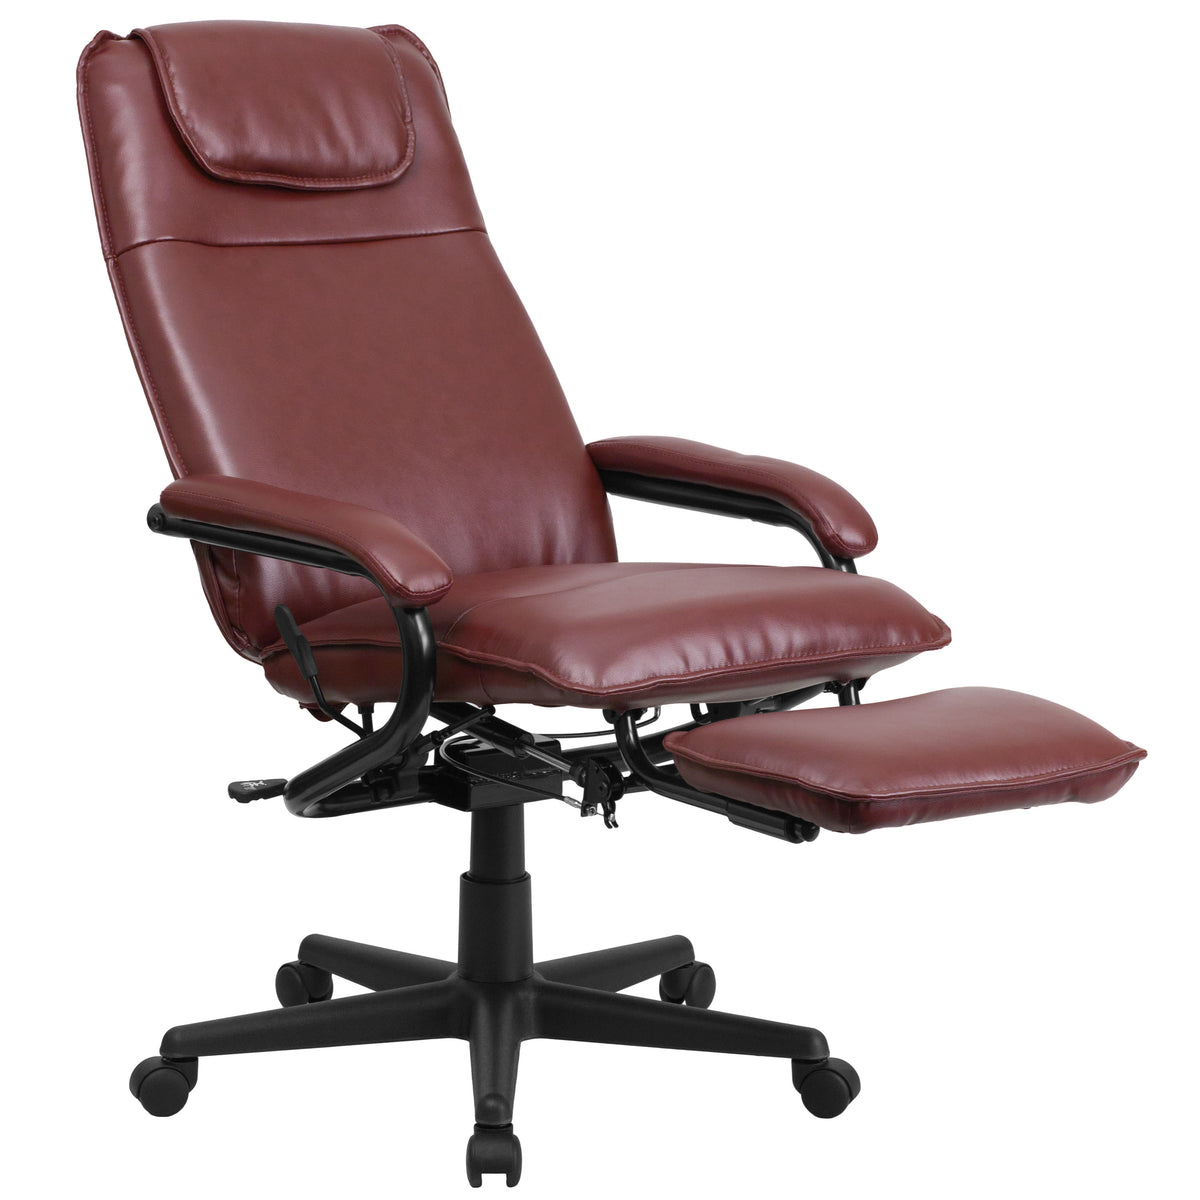 Burgundy |#| High Back Burgundy LeatherSoft Executive Reclining Ergonomic Office Chair